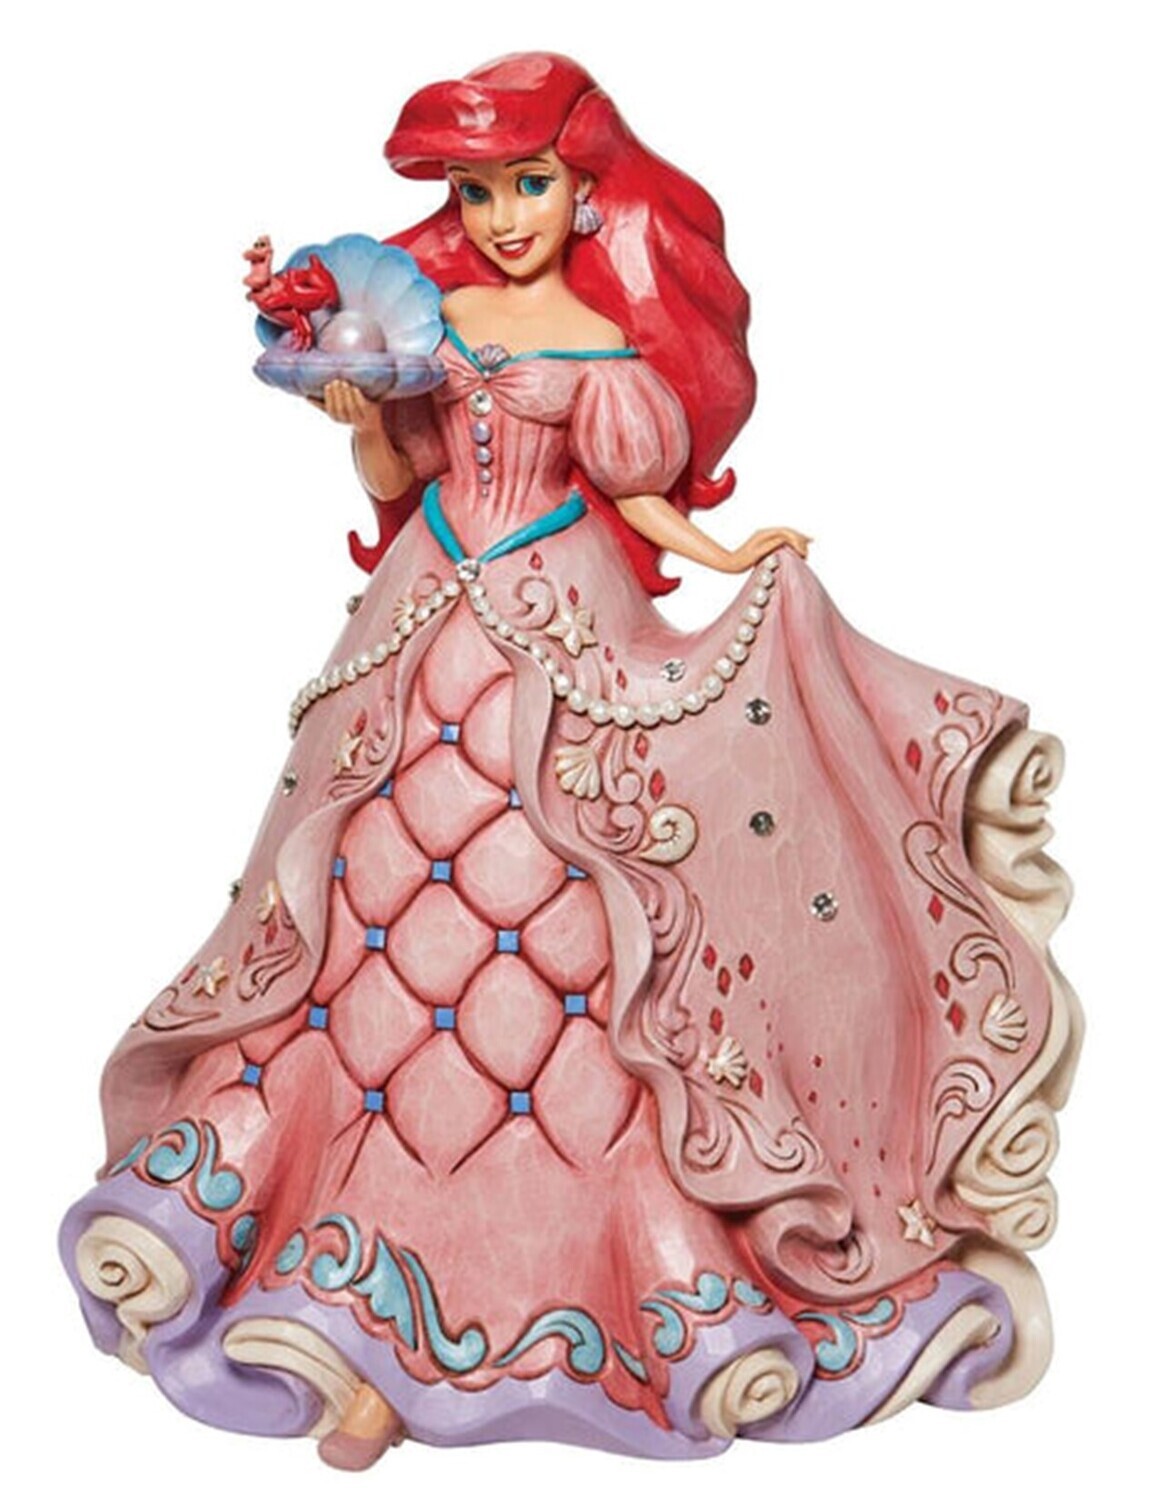 Jim Shore Disney Traditions "A Precious Pearl - Ariel in Gown" Large Figurine Enesco # 6010100